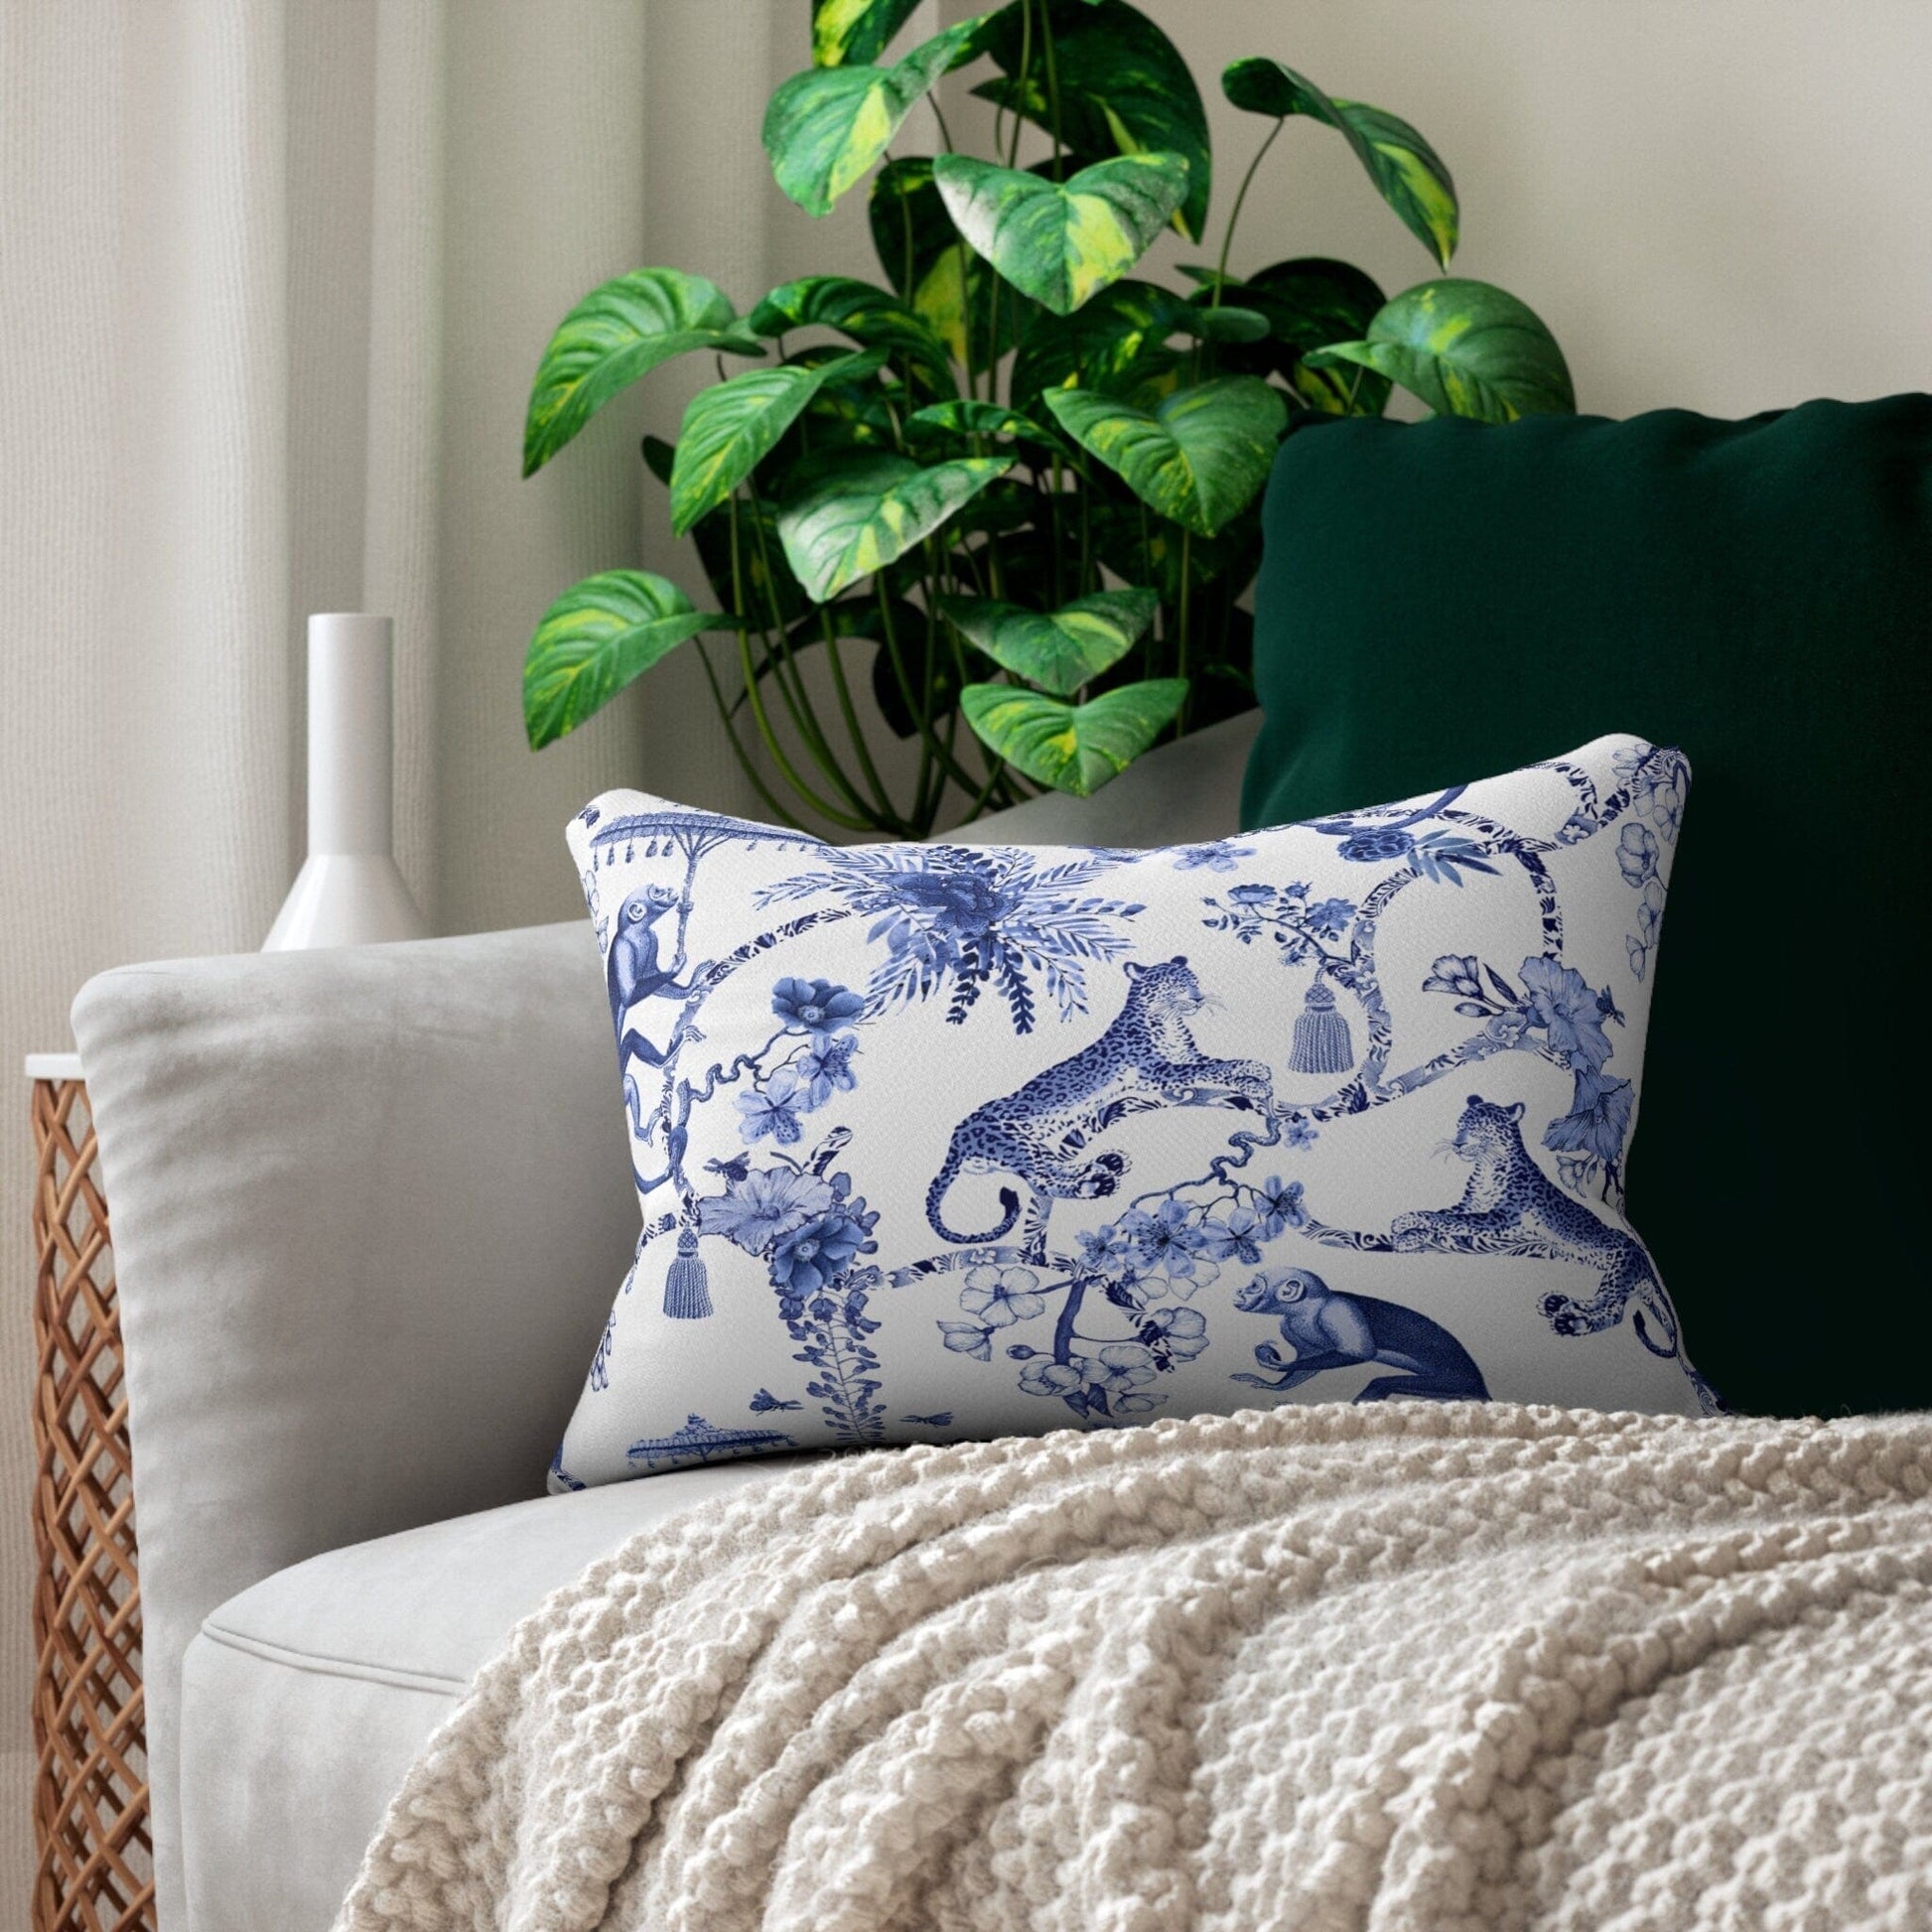 Kate McEnroe New York Chinoiserie Lumbar Pillow, Botanical Toile Bedding Collection, Floral Blue and White Chinoiserie Toile Throw Pillow with Insert Throw Pillows 28157272031391349351